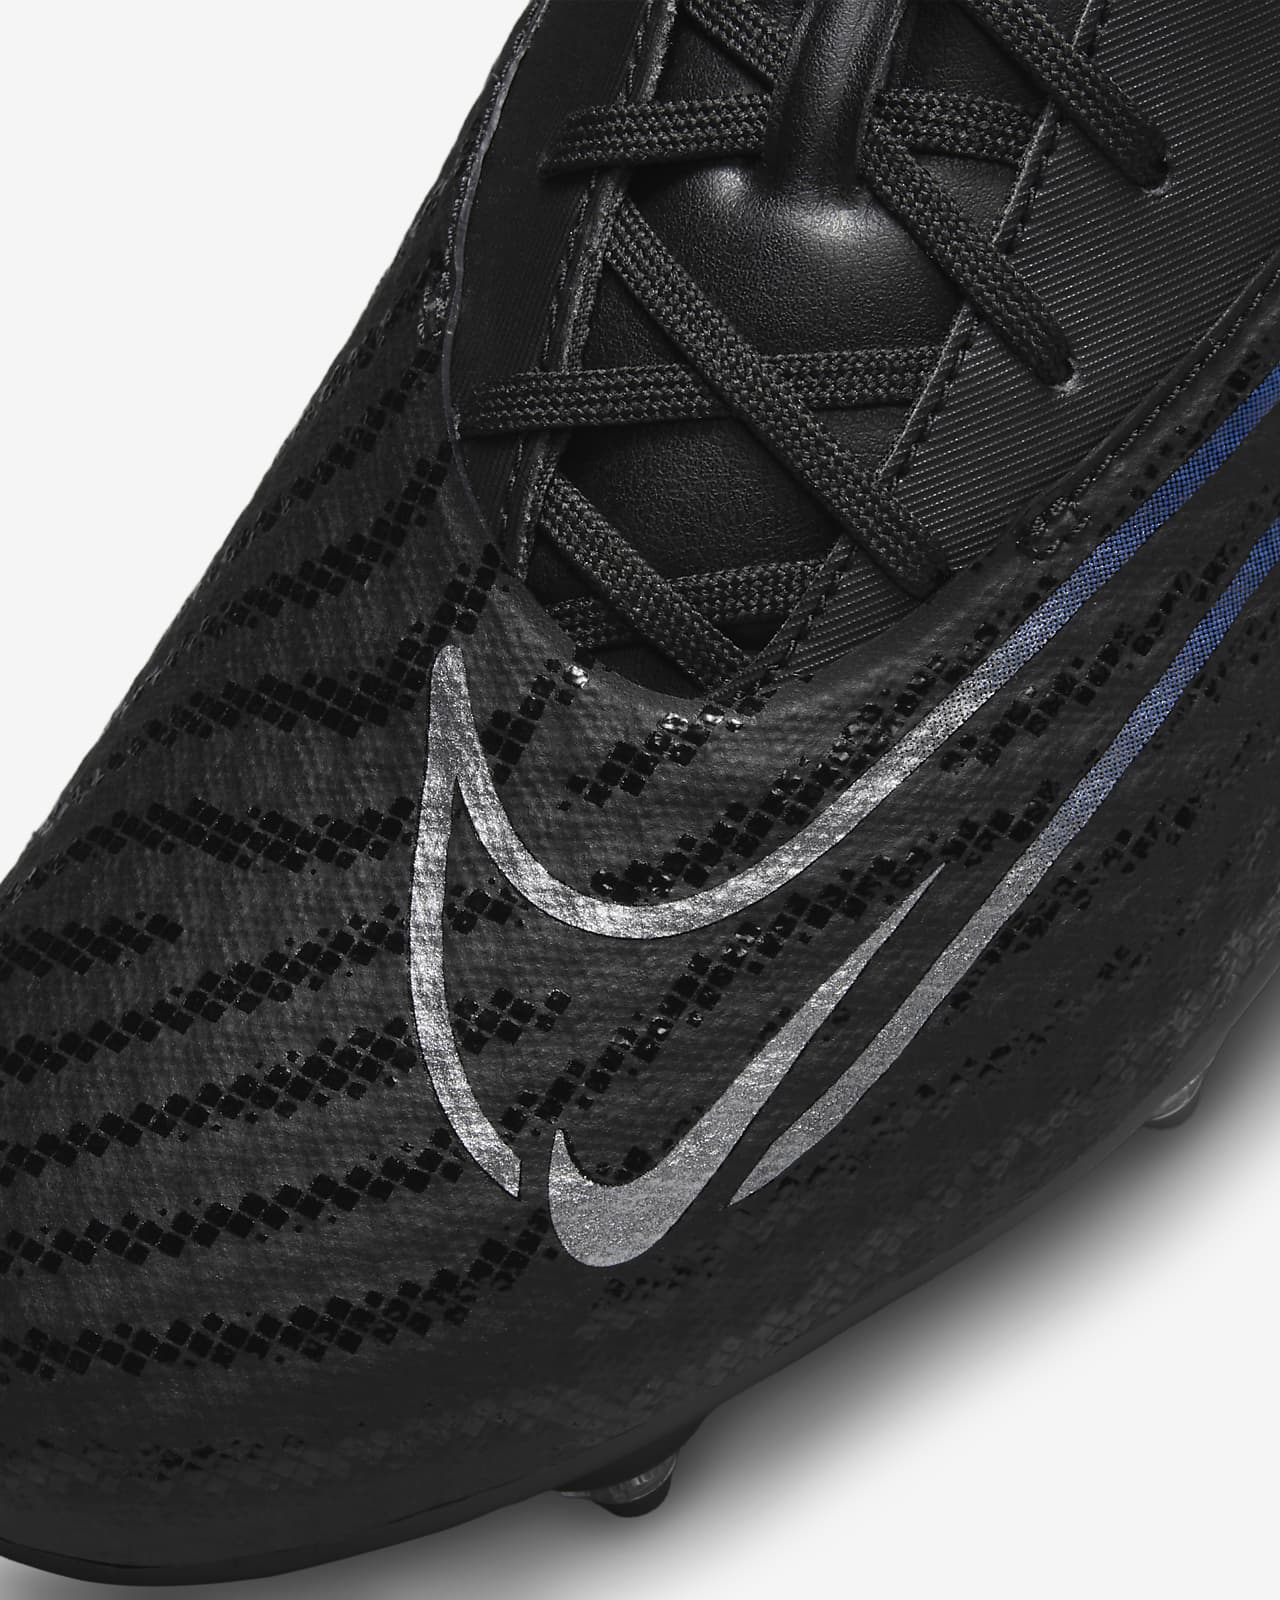 Chaussure de foot basse à crampons pour terrain sec Nike Phantom